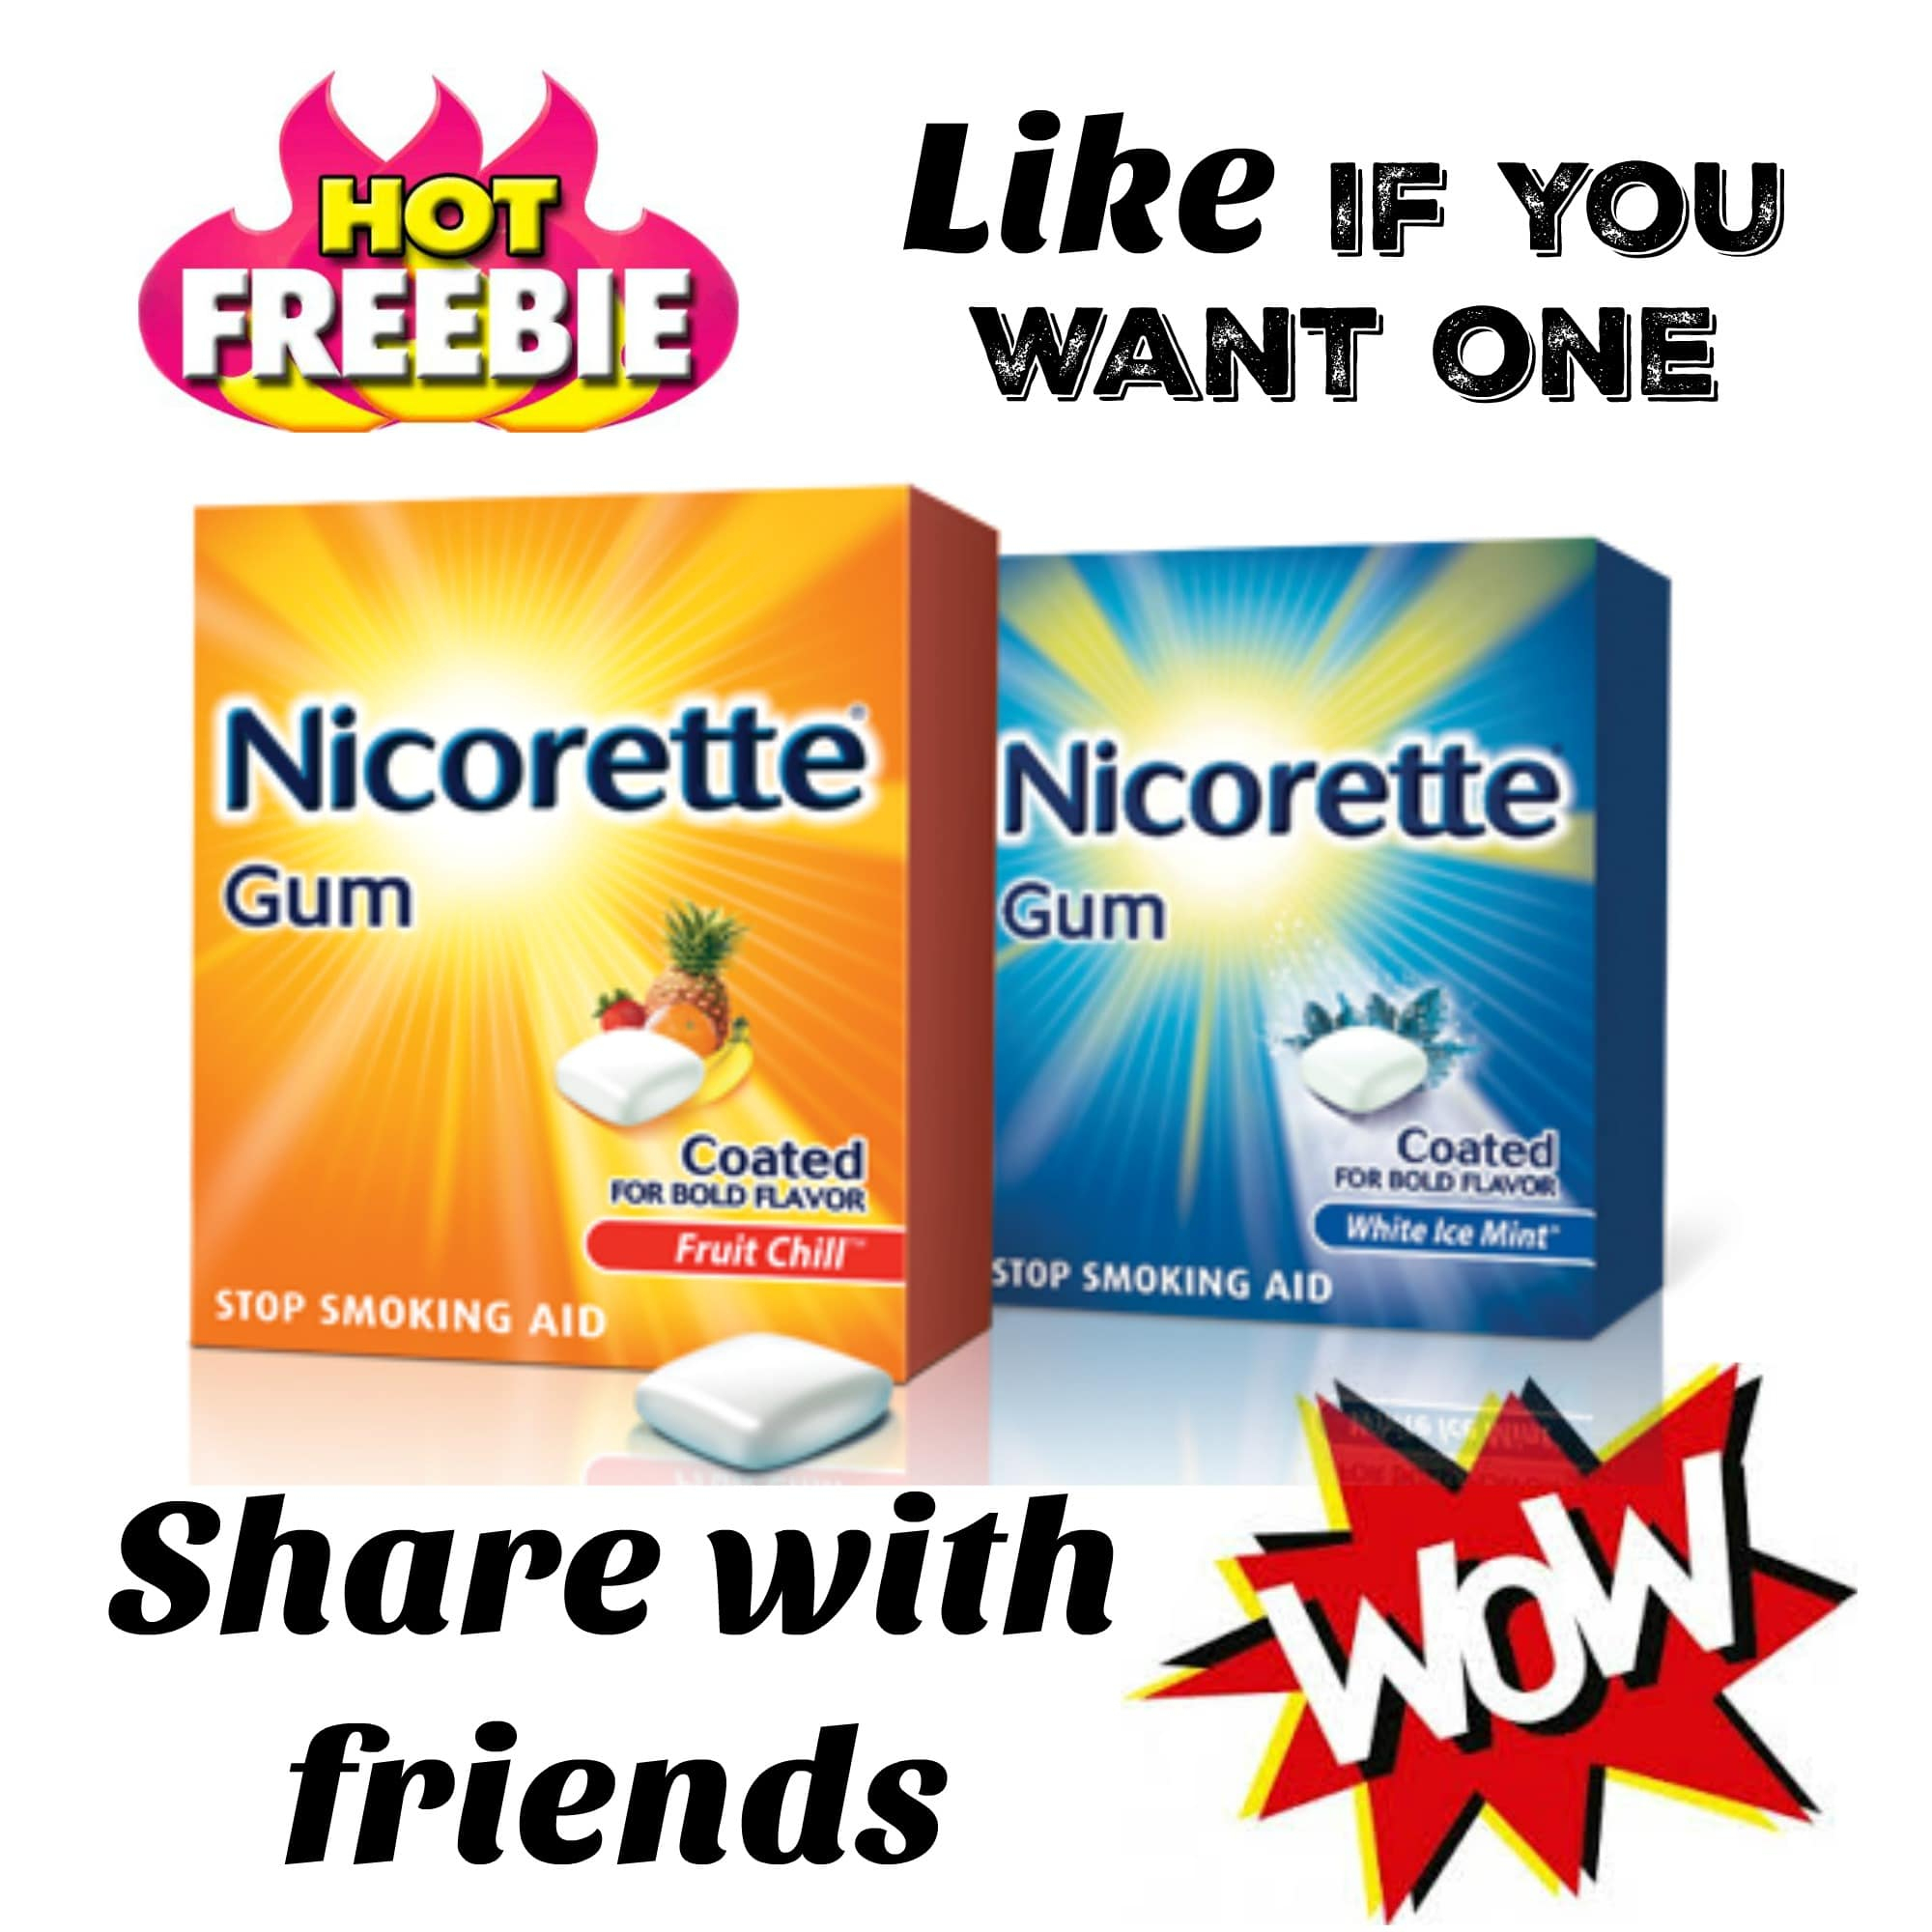 Coupon Nicotine Gum - Pc Game Deals Reddit - Free Printable Nicotine Patch Coupons